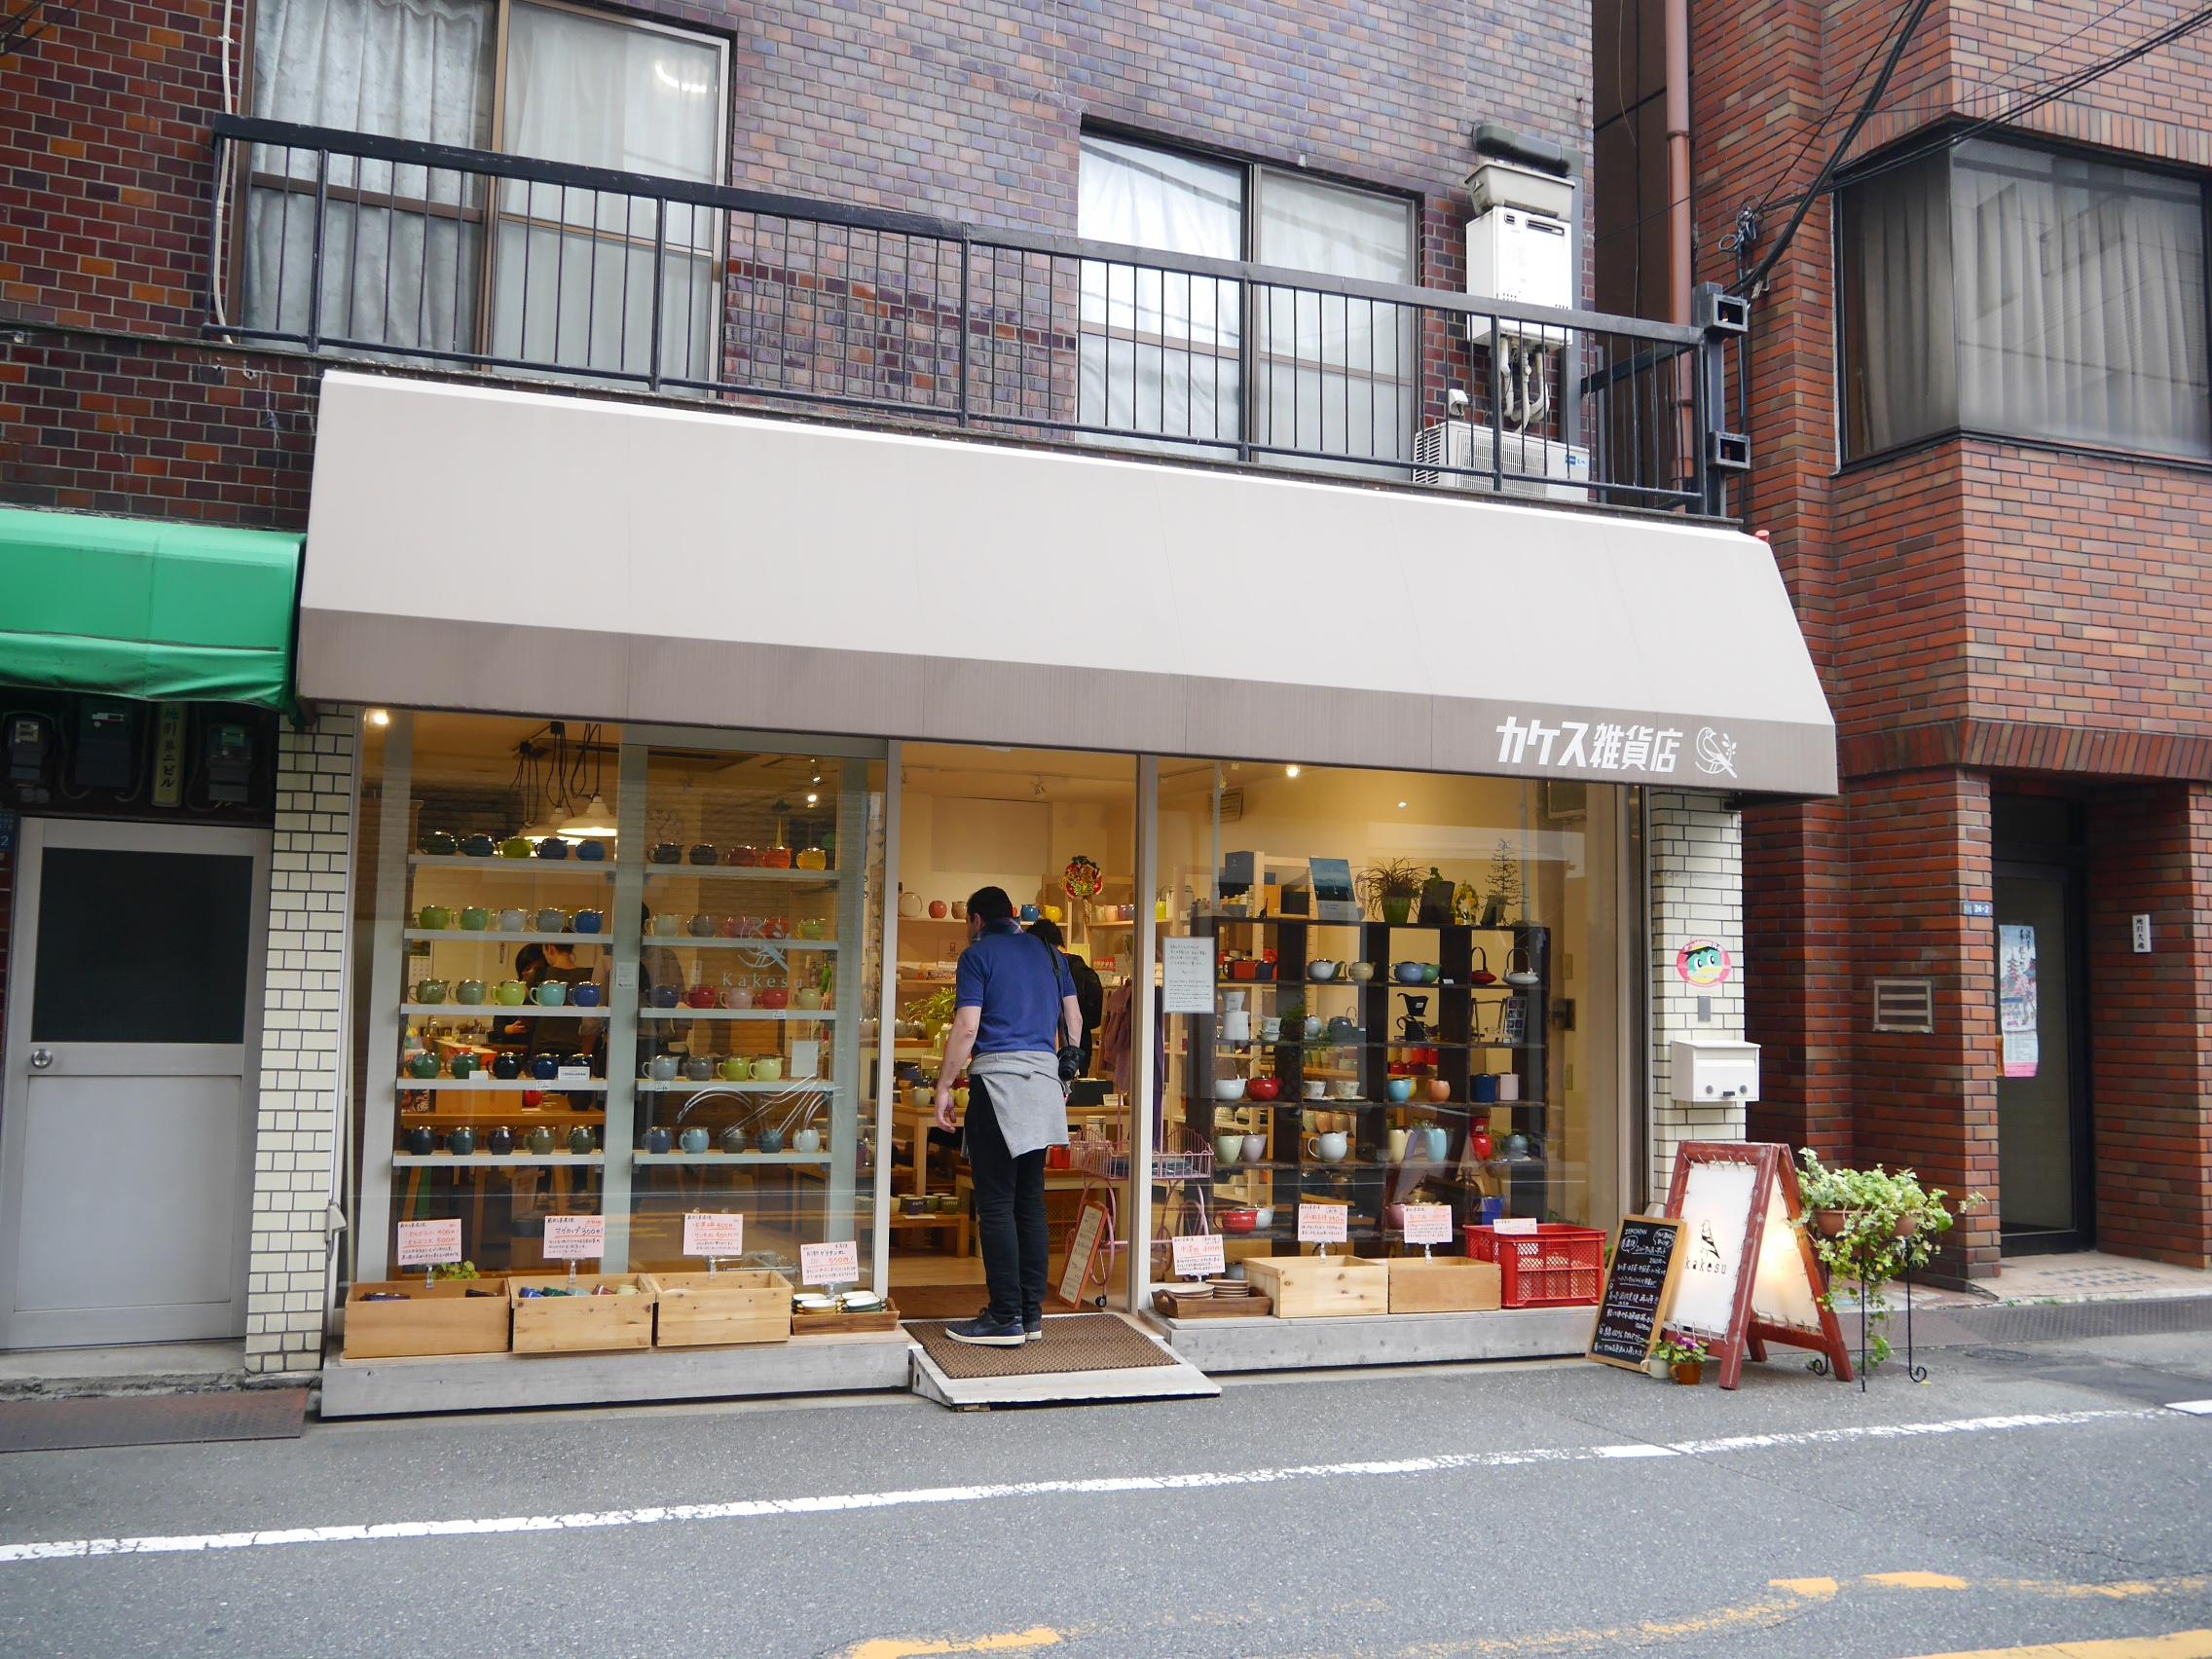 Cover image of this place Kakesu Zakkaten (カケス雑貨店)